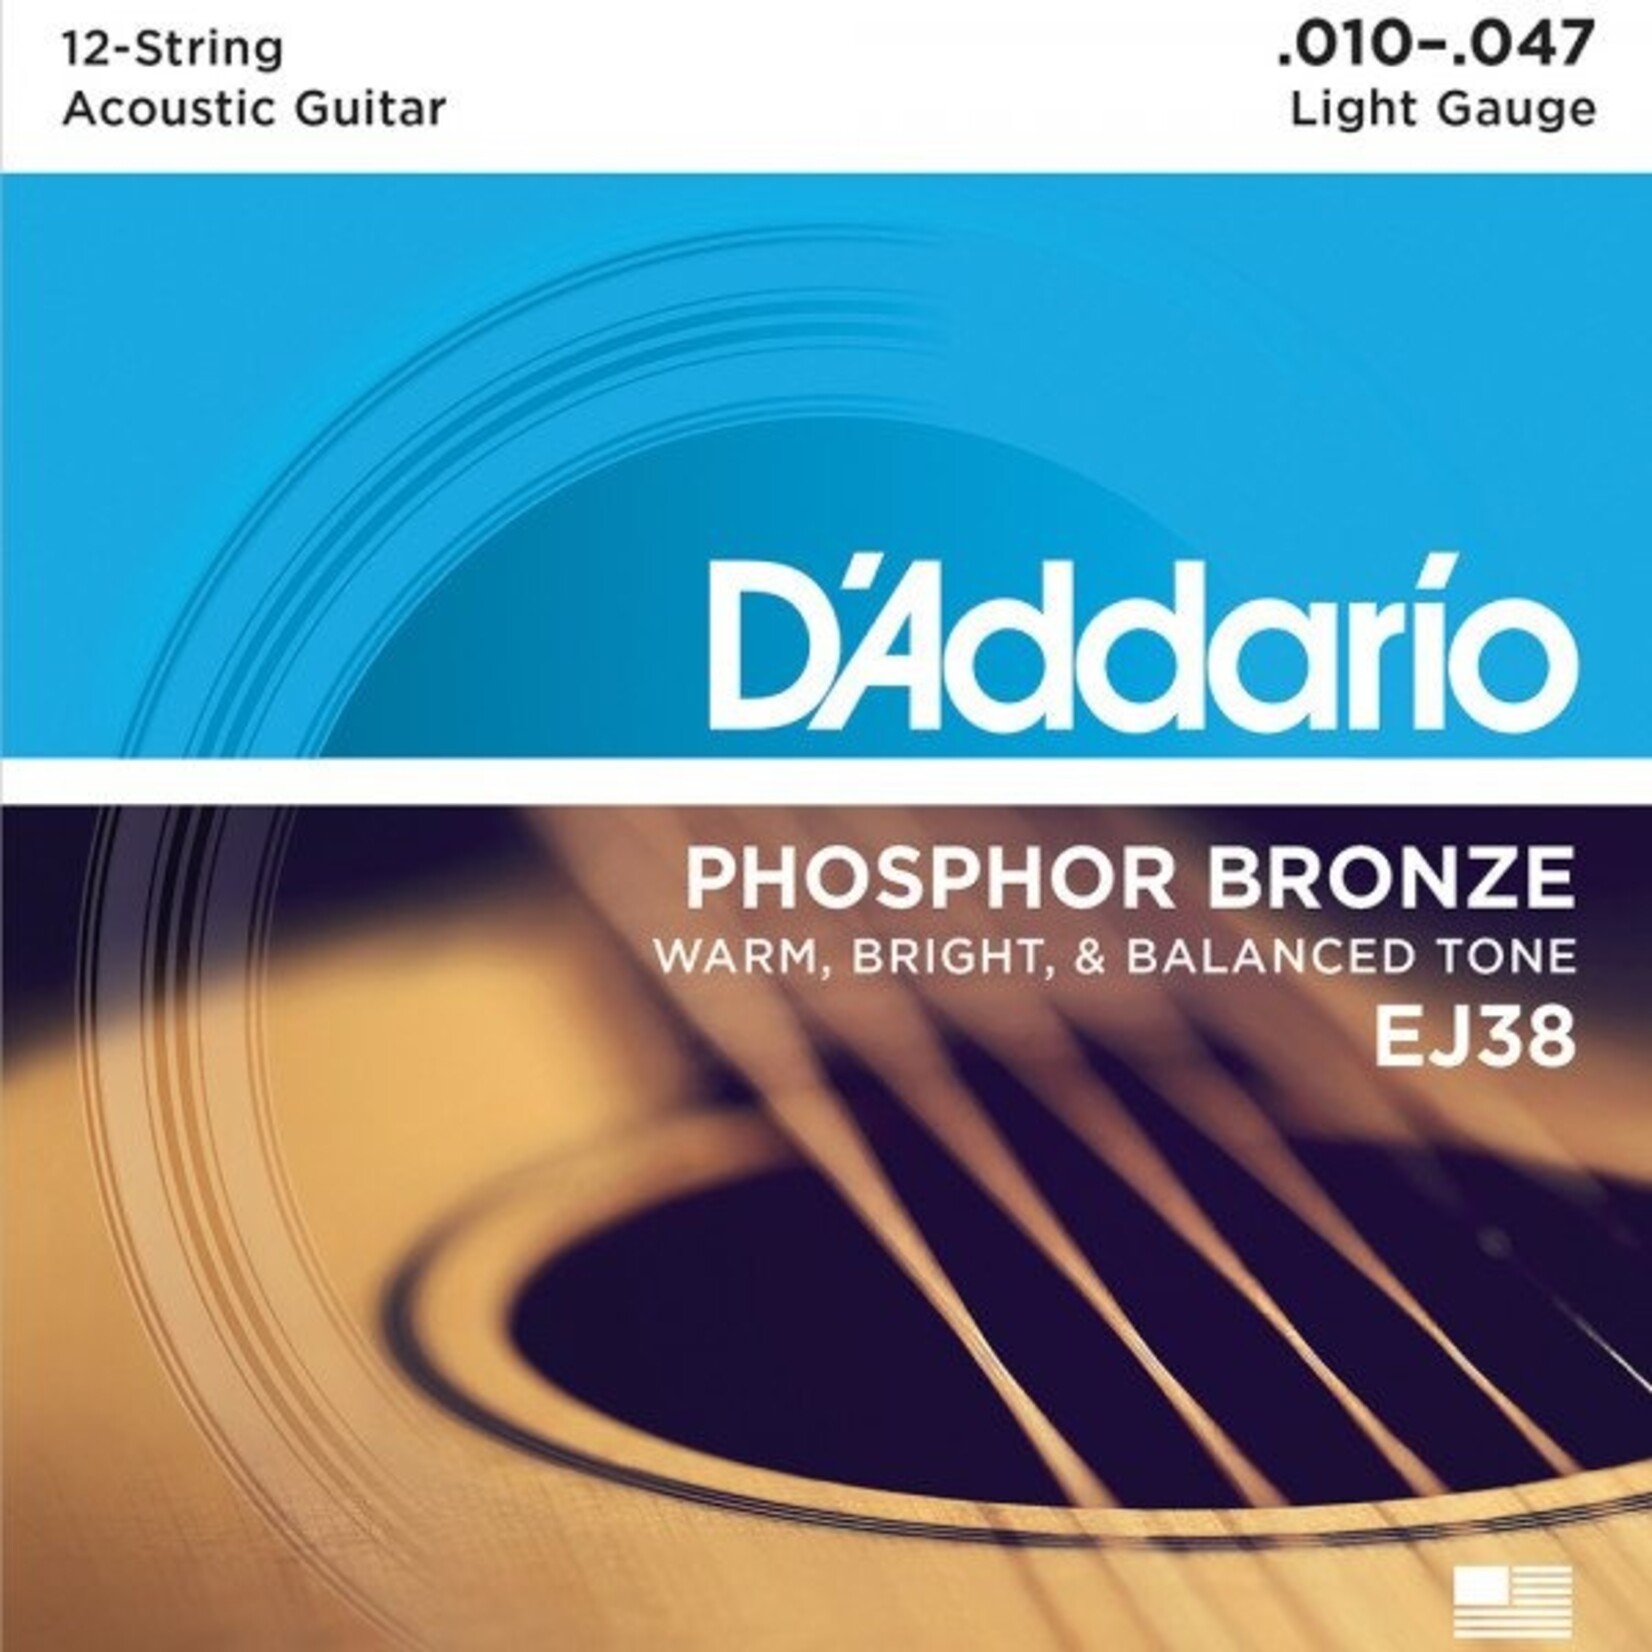 D'Addario D'Addario EJ38 12-String Phosphor Bronze Acoustic Guitar Strings Light 10-47